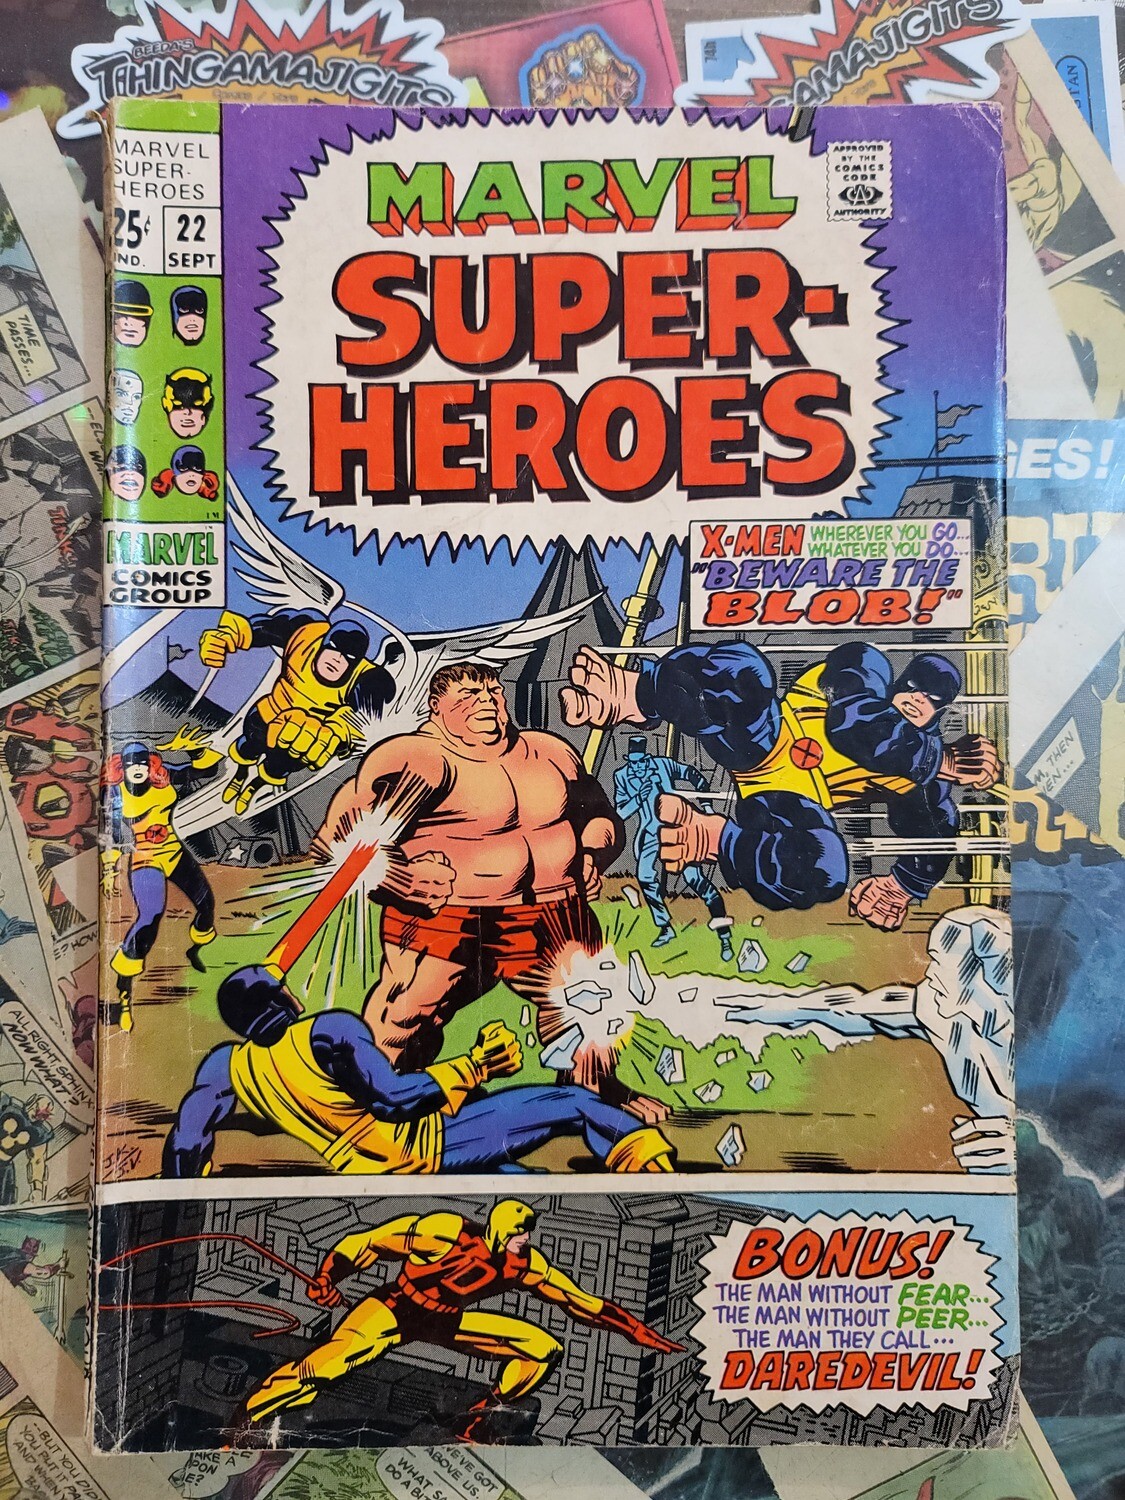 Marvel Suer-Heroes #22 4.5